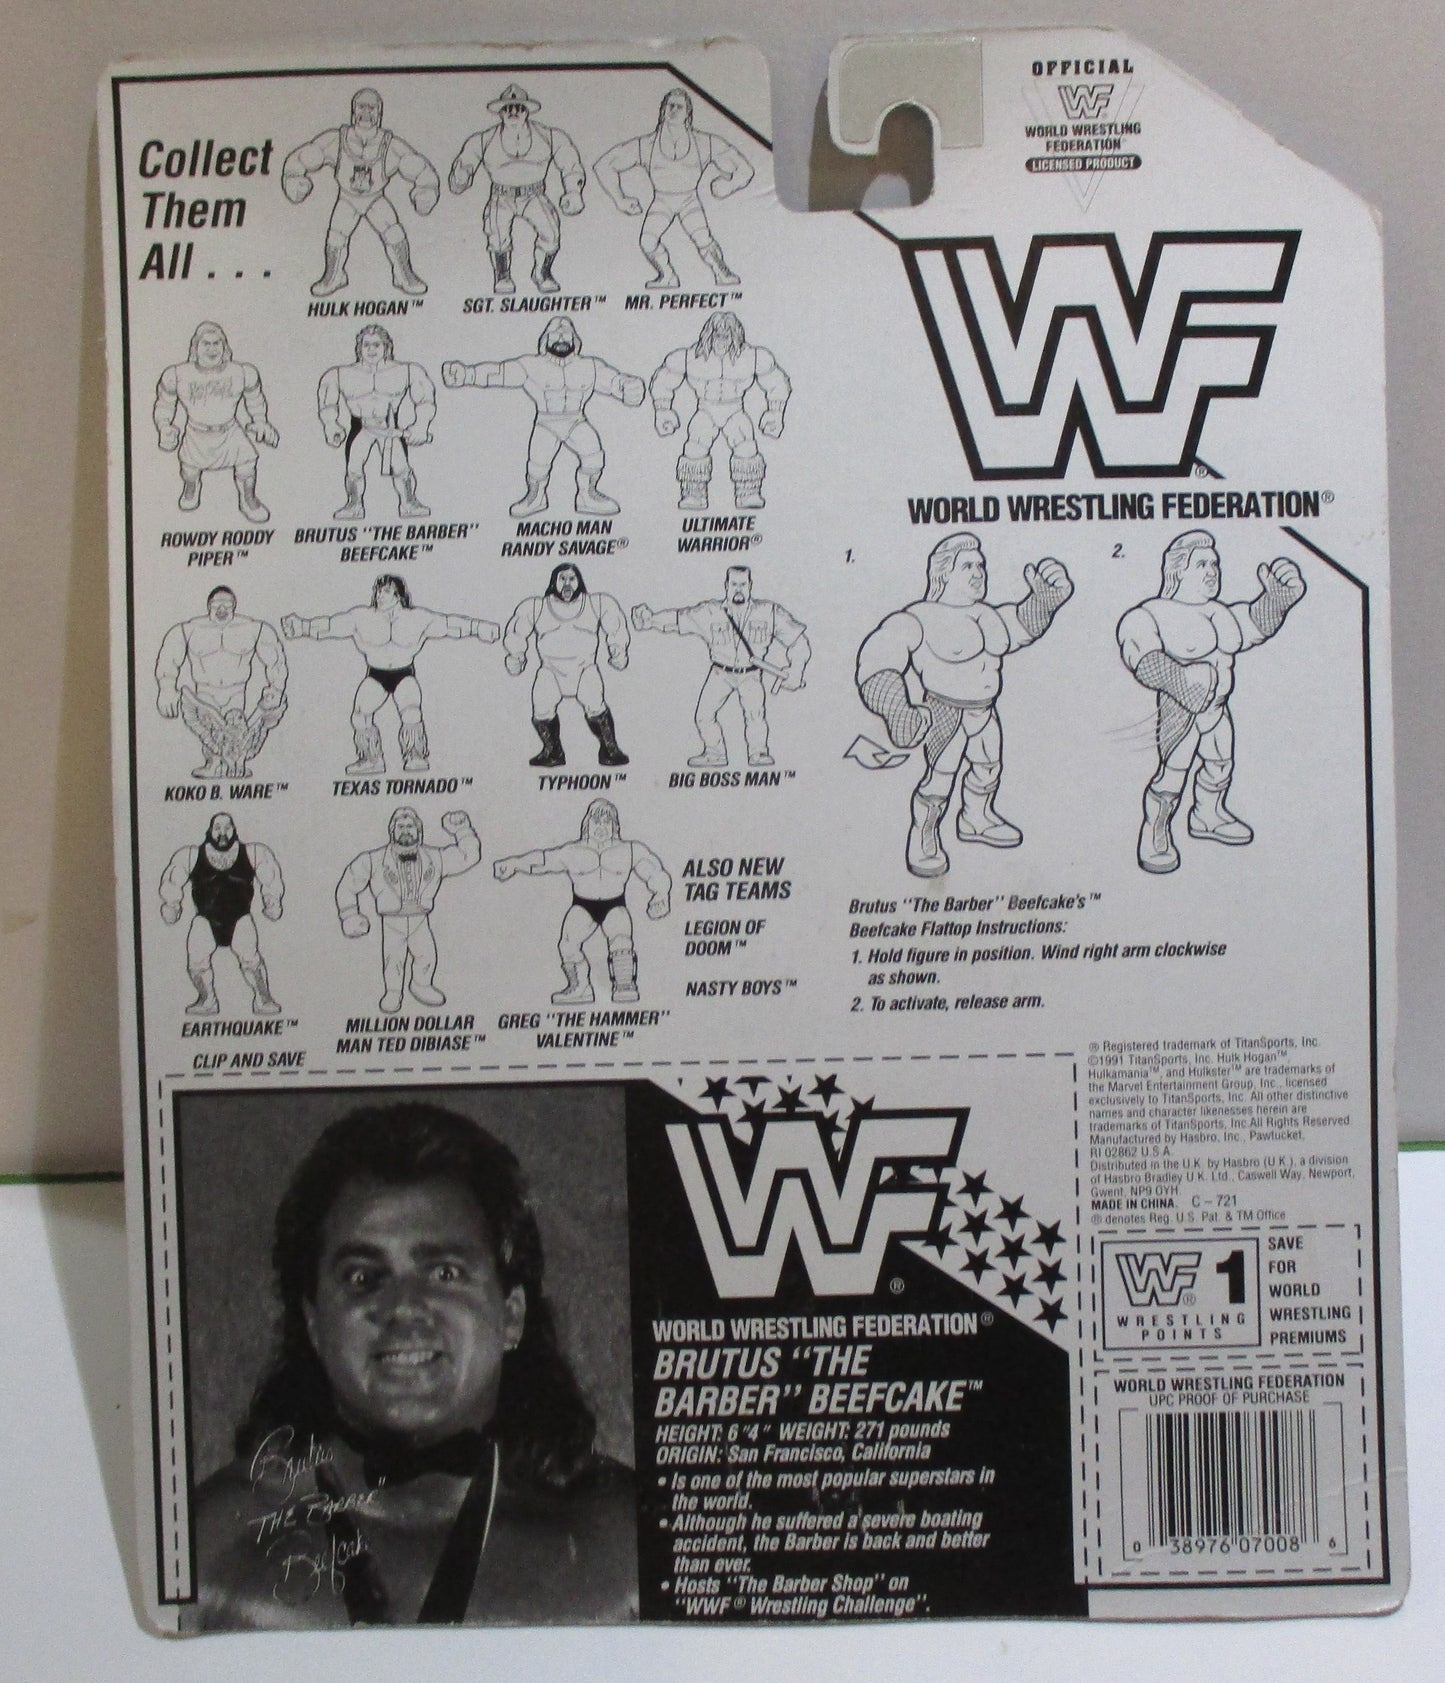 1992 WWF Hasbro Series 3 Brutus "The Barber" Beefcake with Beefcake Flattop!